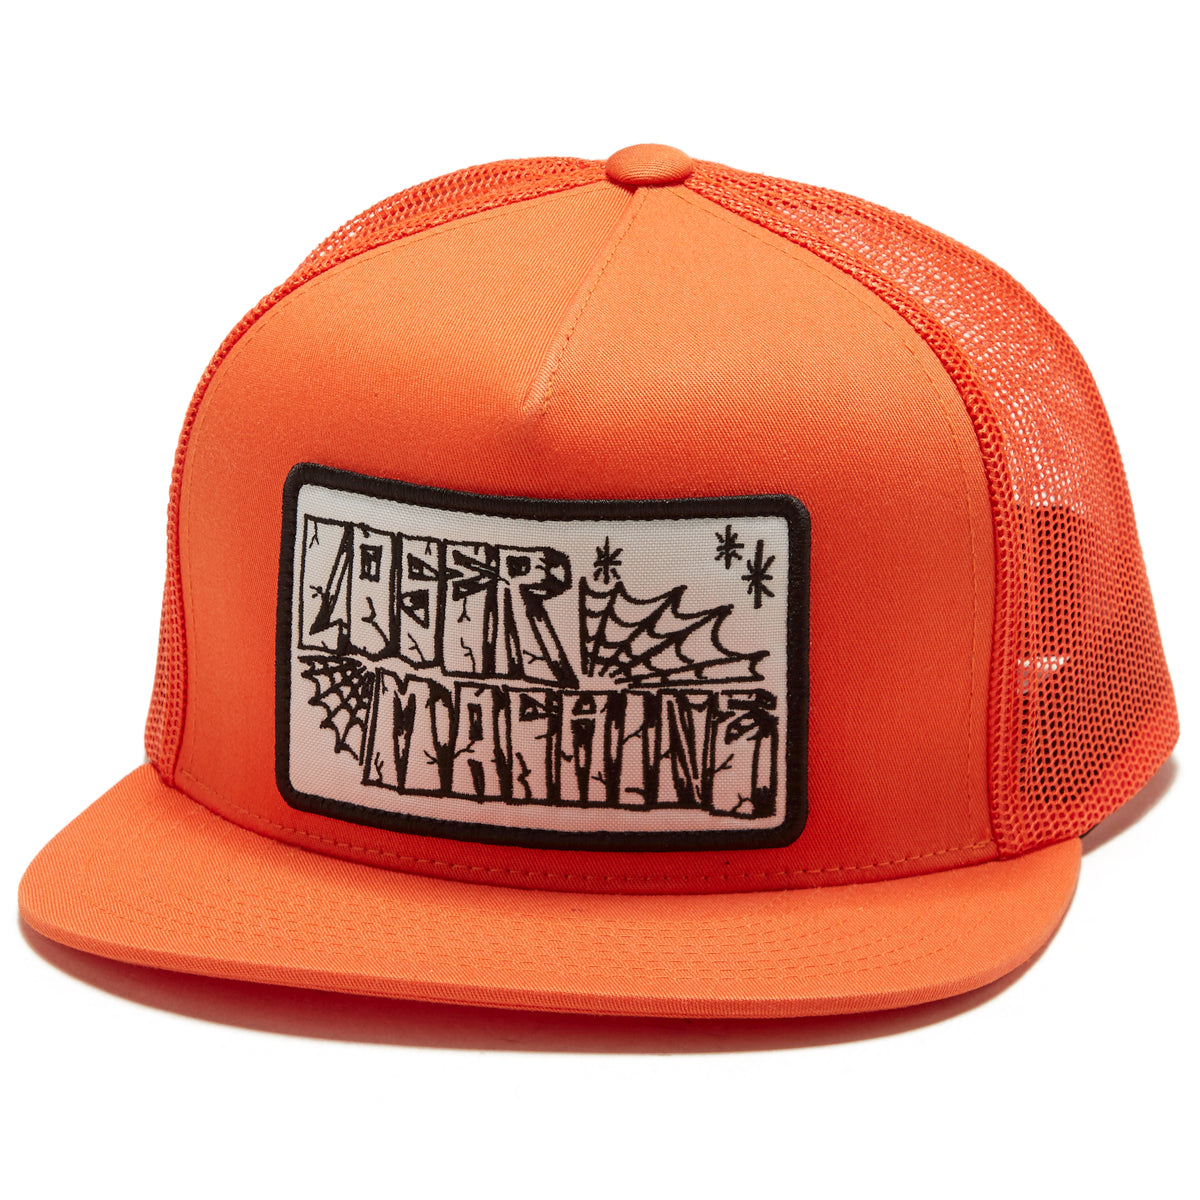 Loser Machine Webbed Hat - Orange image 1